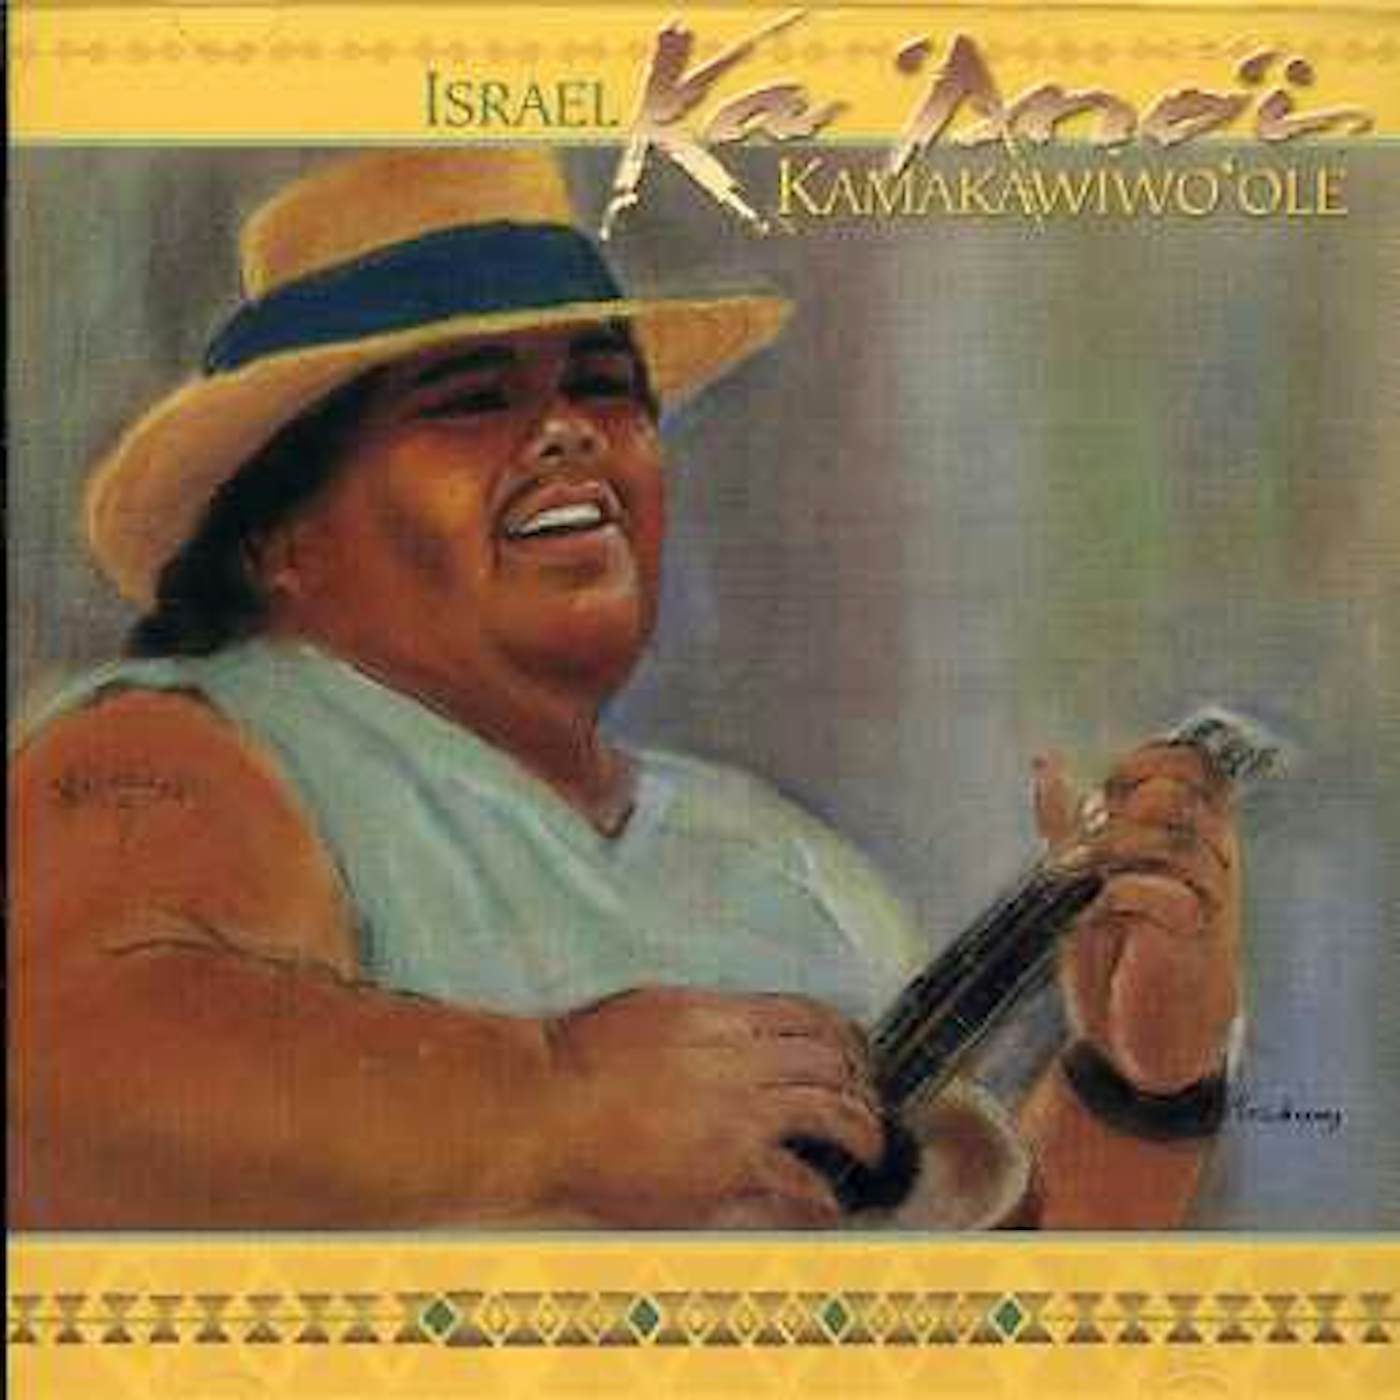 Israel Kamakawiwo'ole KA ANO'I CD